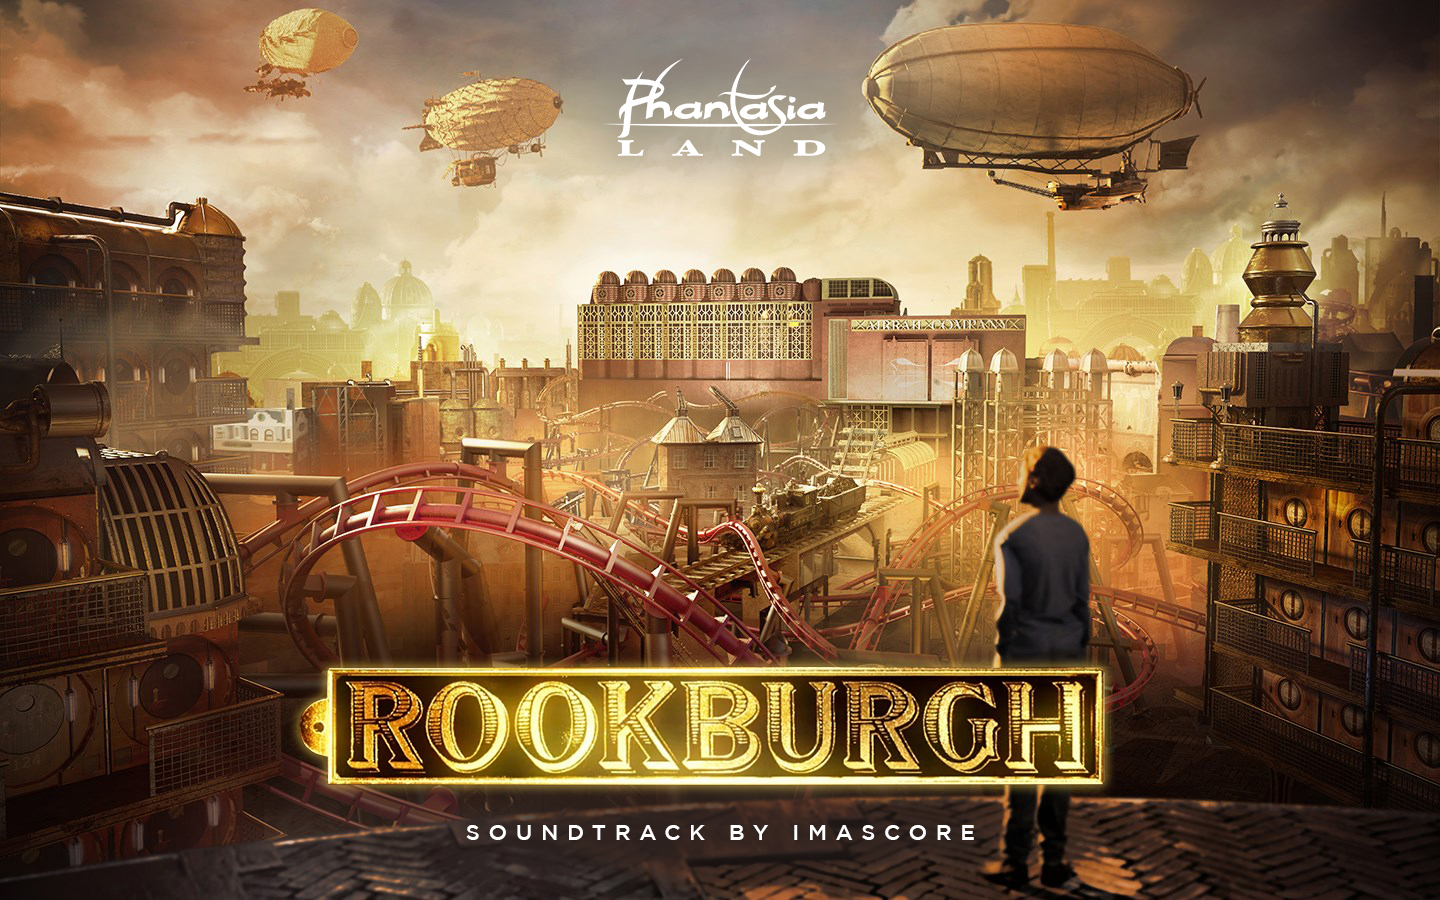 Rookburgh The Soundtrack